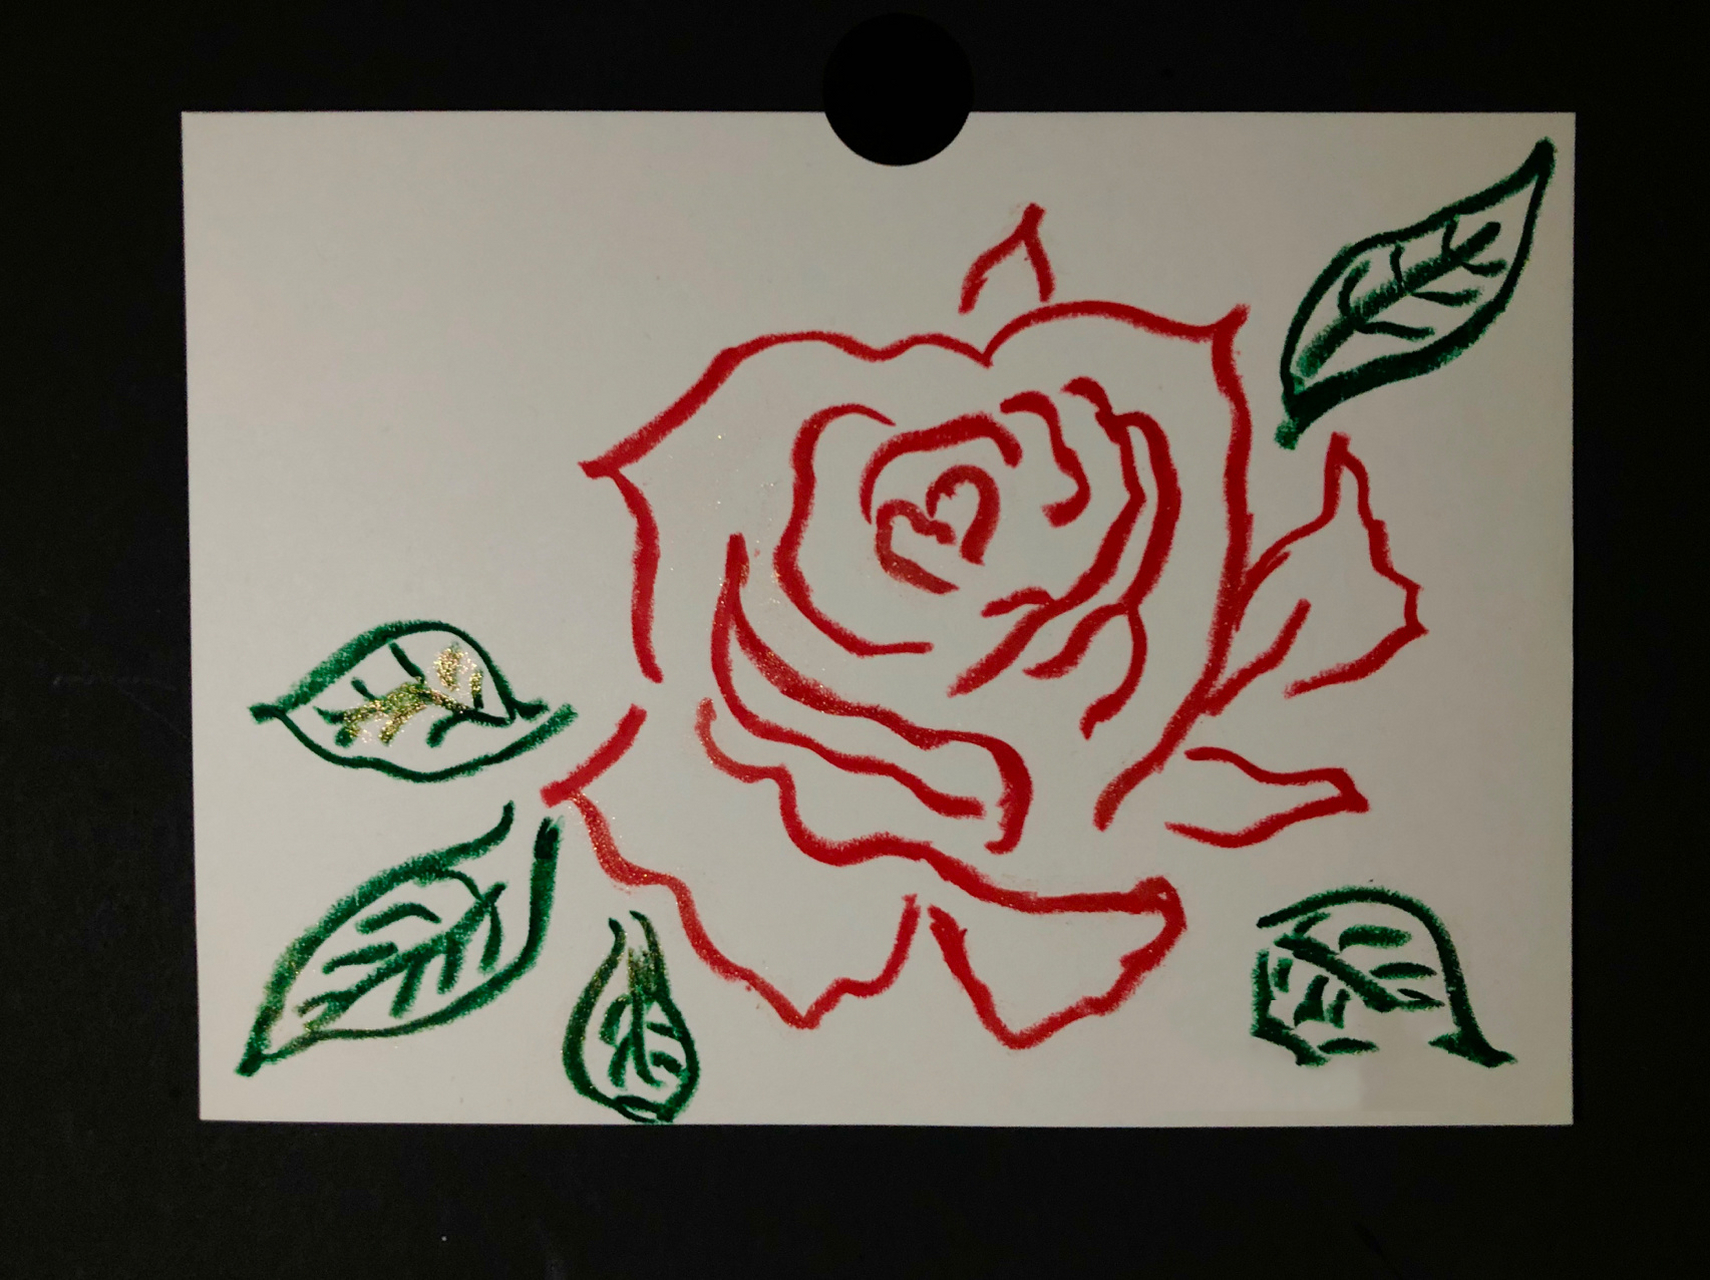 ins风手绘小图案玫瑰图片